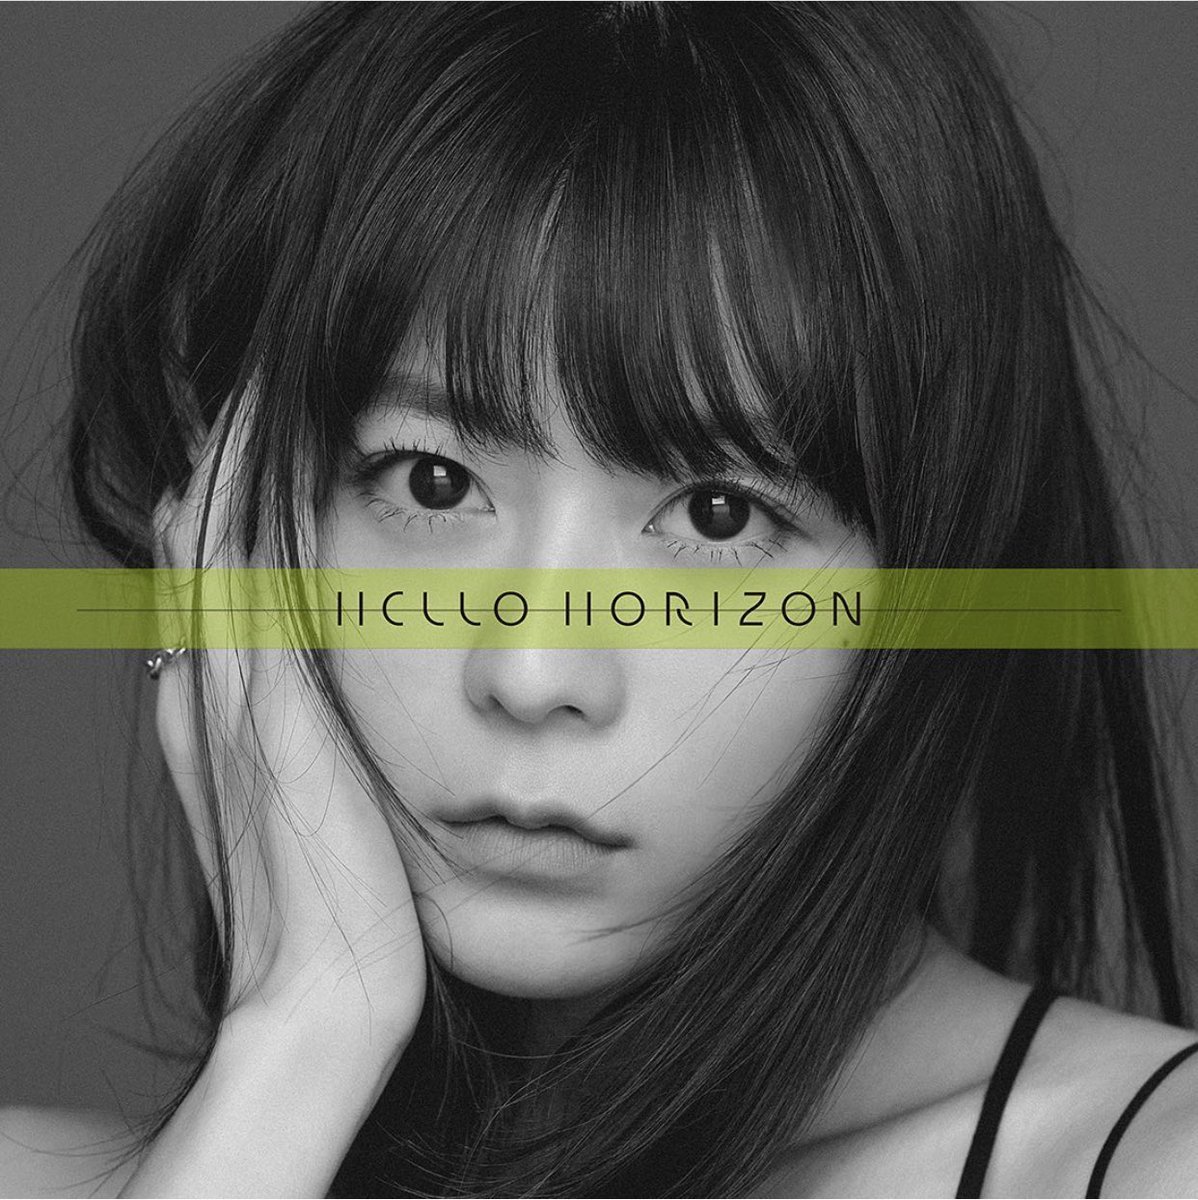 Cover art for『Inori Minase - HELLO HORIZON』from the release『HELLO HORIZON』